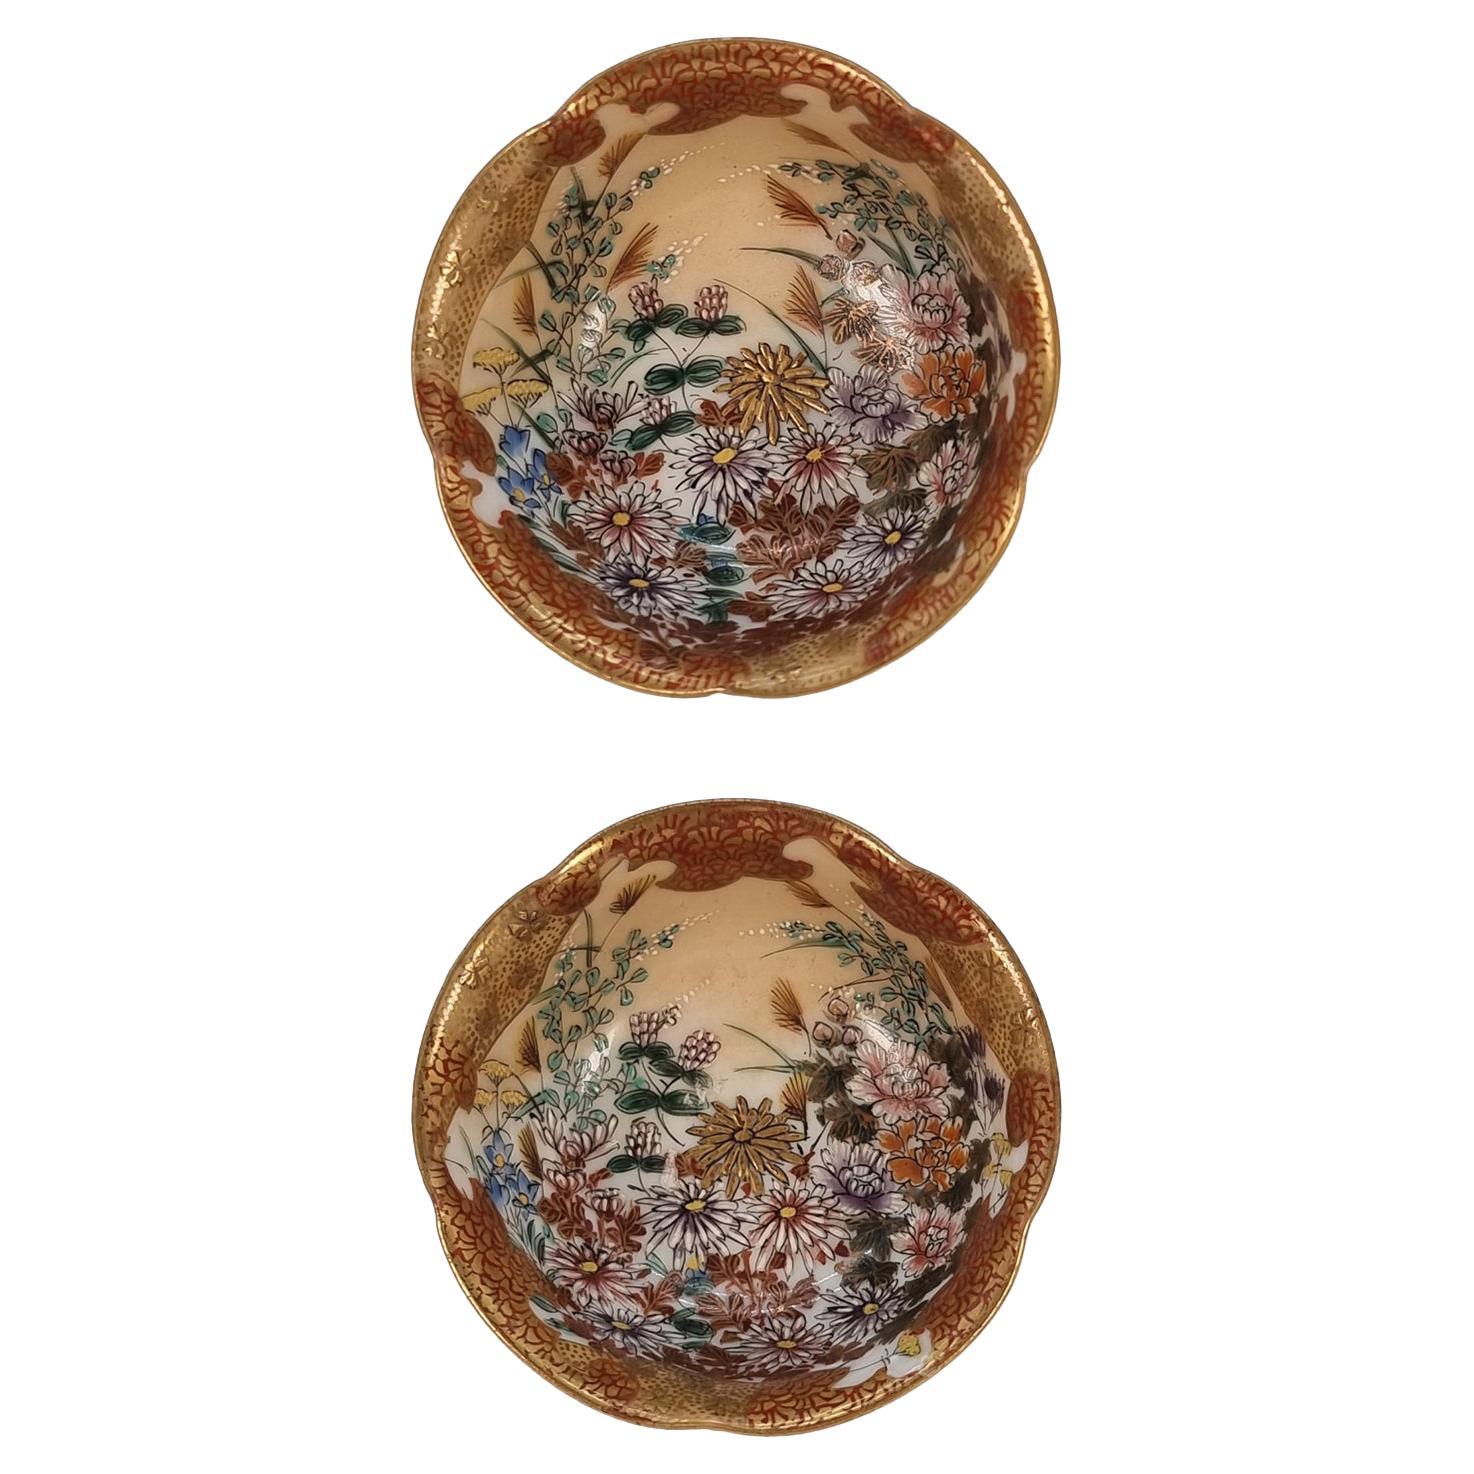 A pair of 19th C Japanese Meiji period miniature porcelain Kutani ware bowls